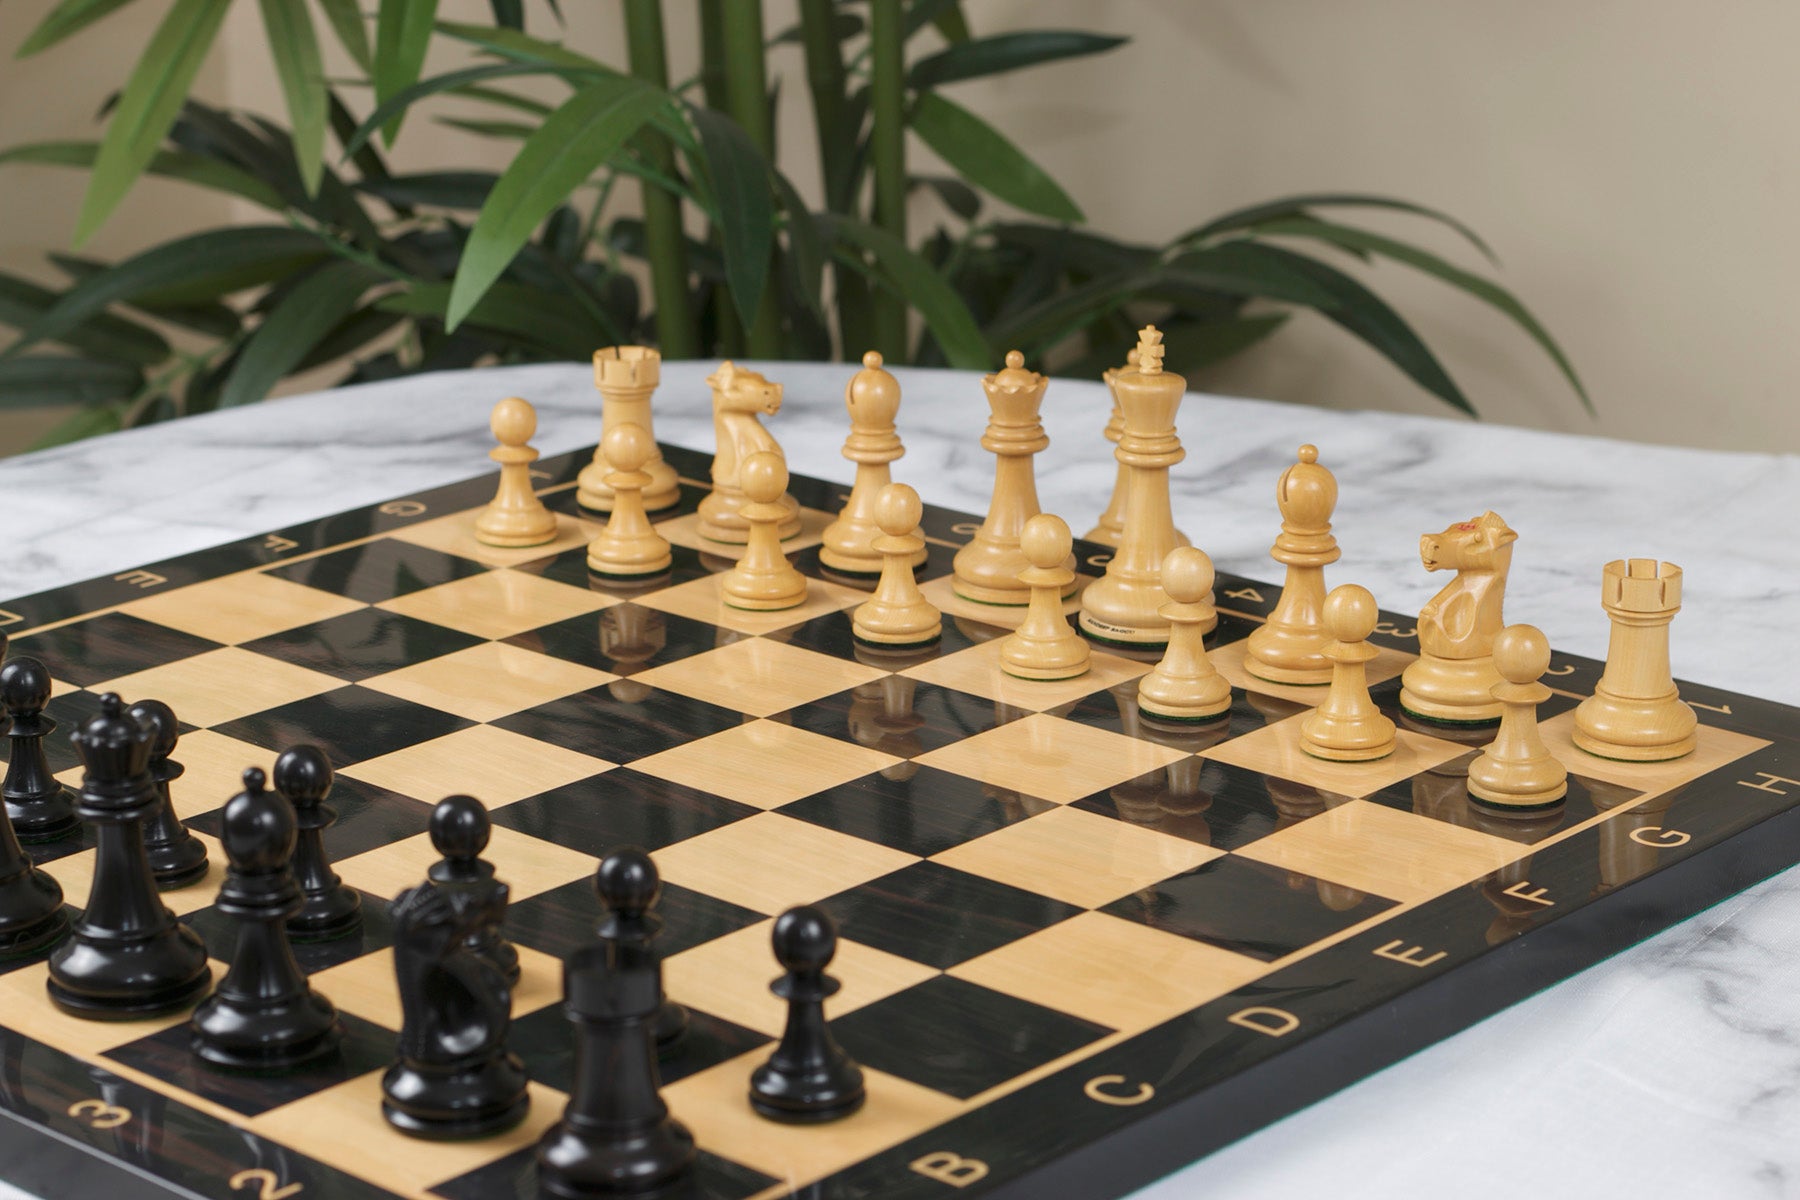 Chessflix - Club de ajedrez 